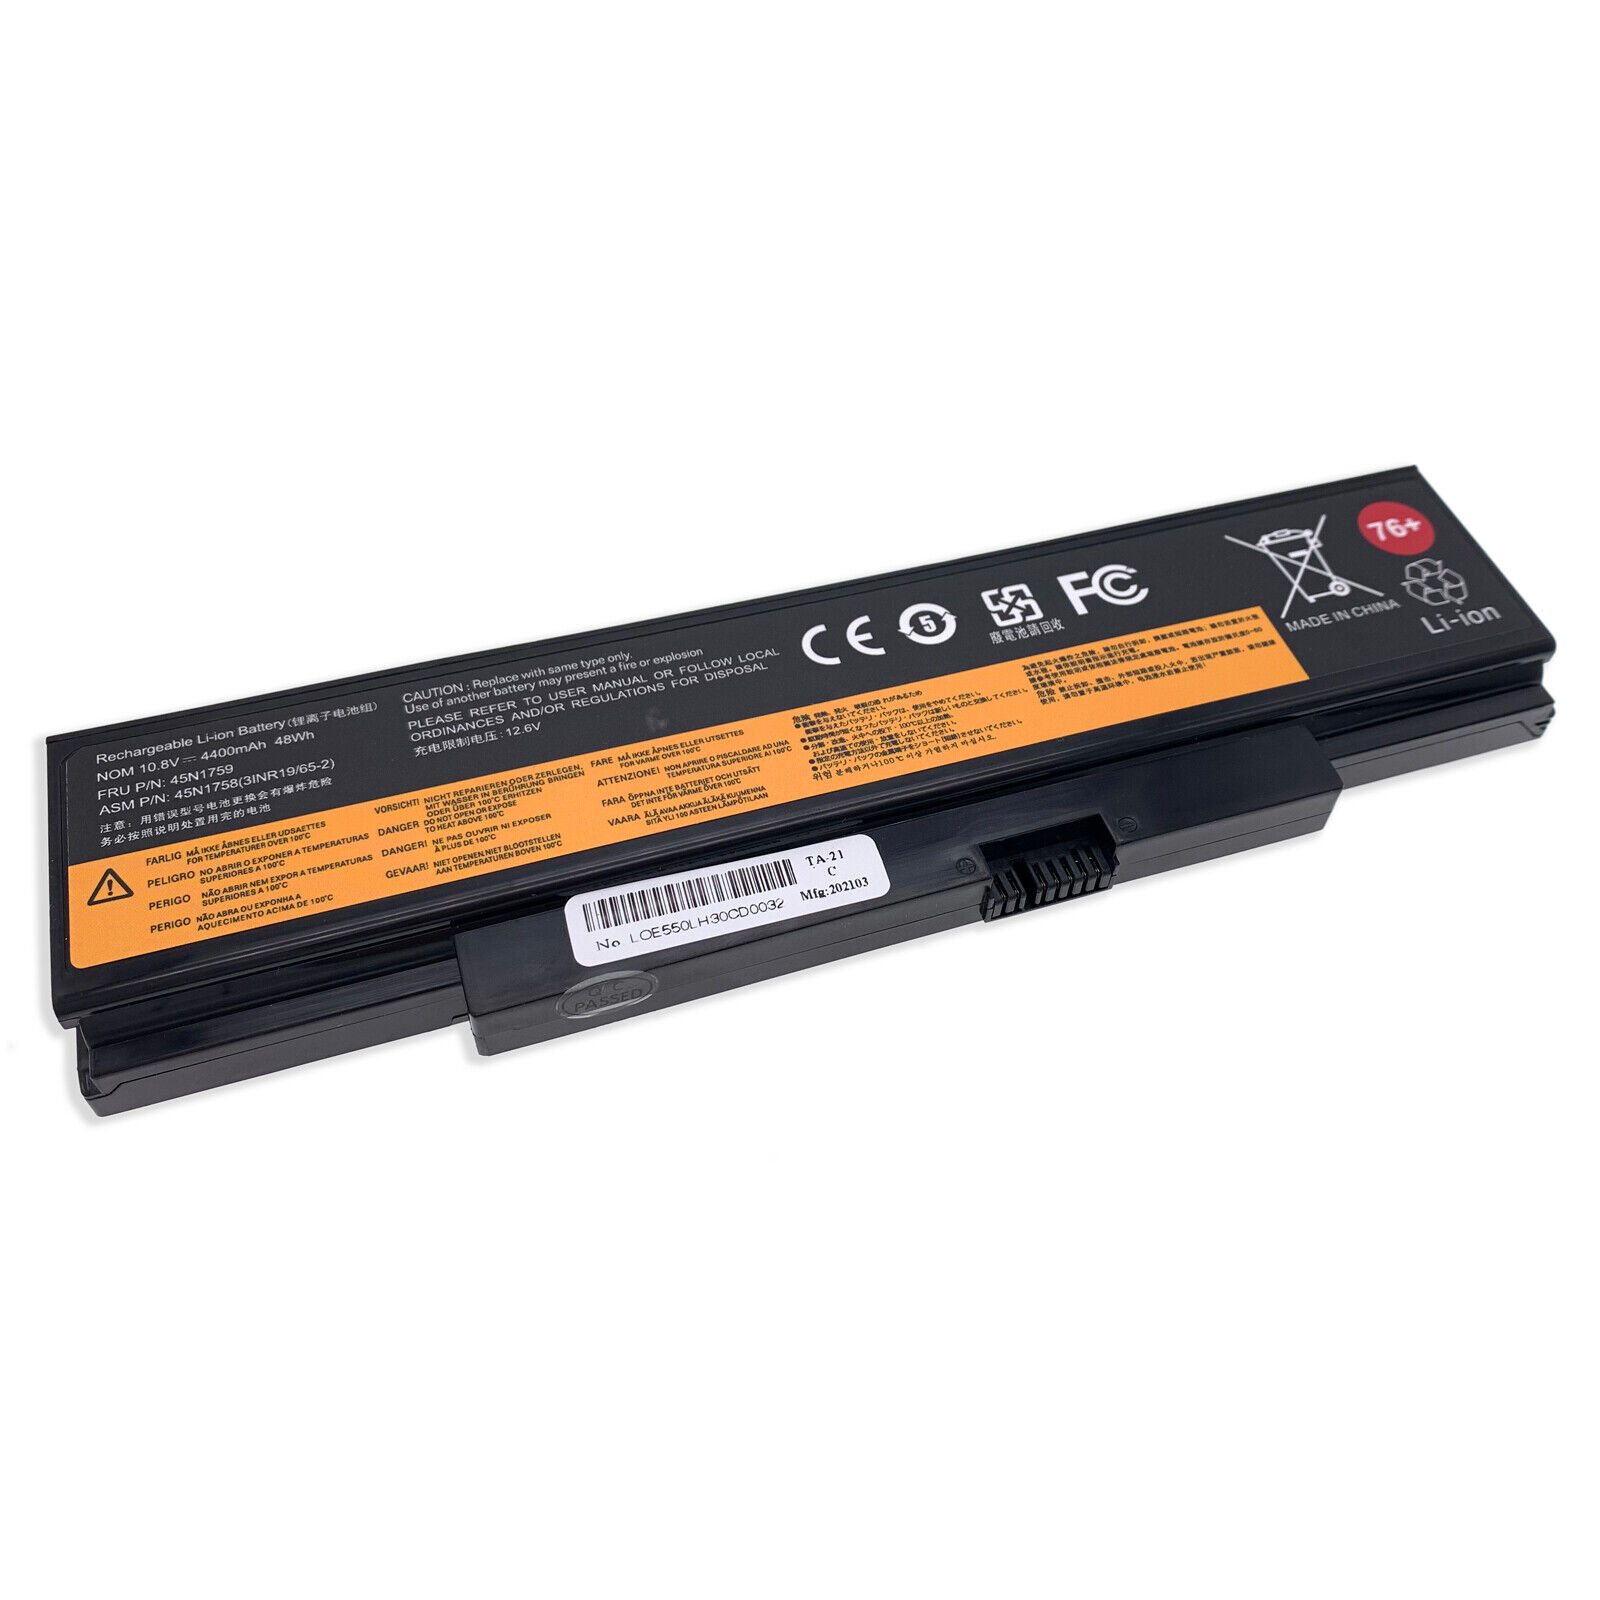 76+ Battery for Lenovo ThinkPad Edge E560 E550 45N1758 45N1759 45N1761 45N1762